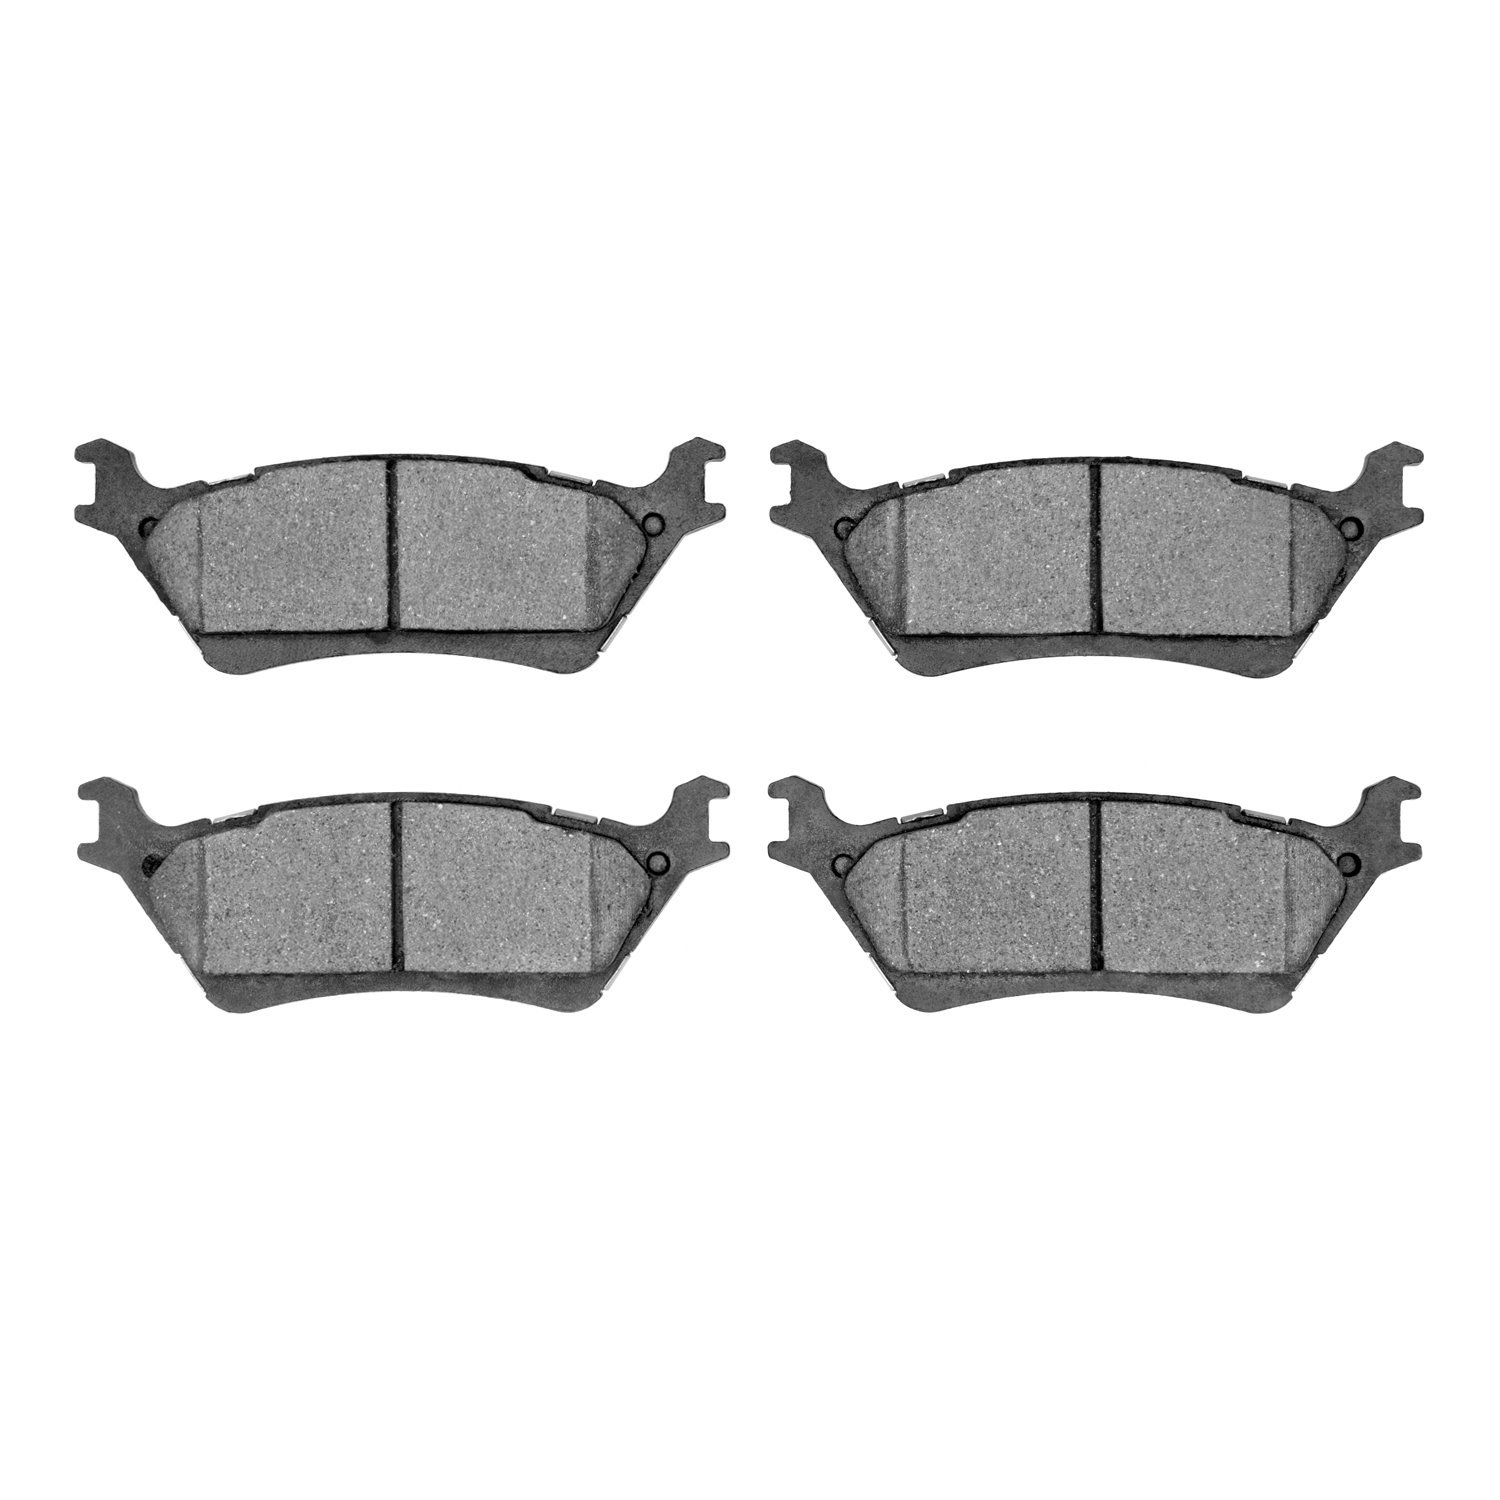 Super-Duty Brake Pads, 2012-2020 Ford/Lincoln/Mercury/Mazda, Position: Rear